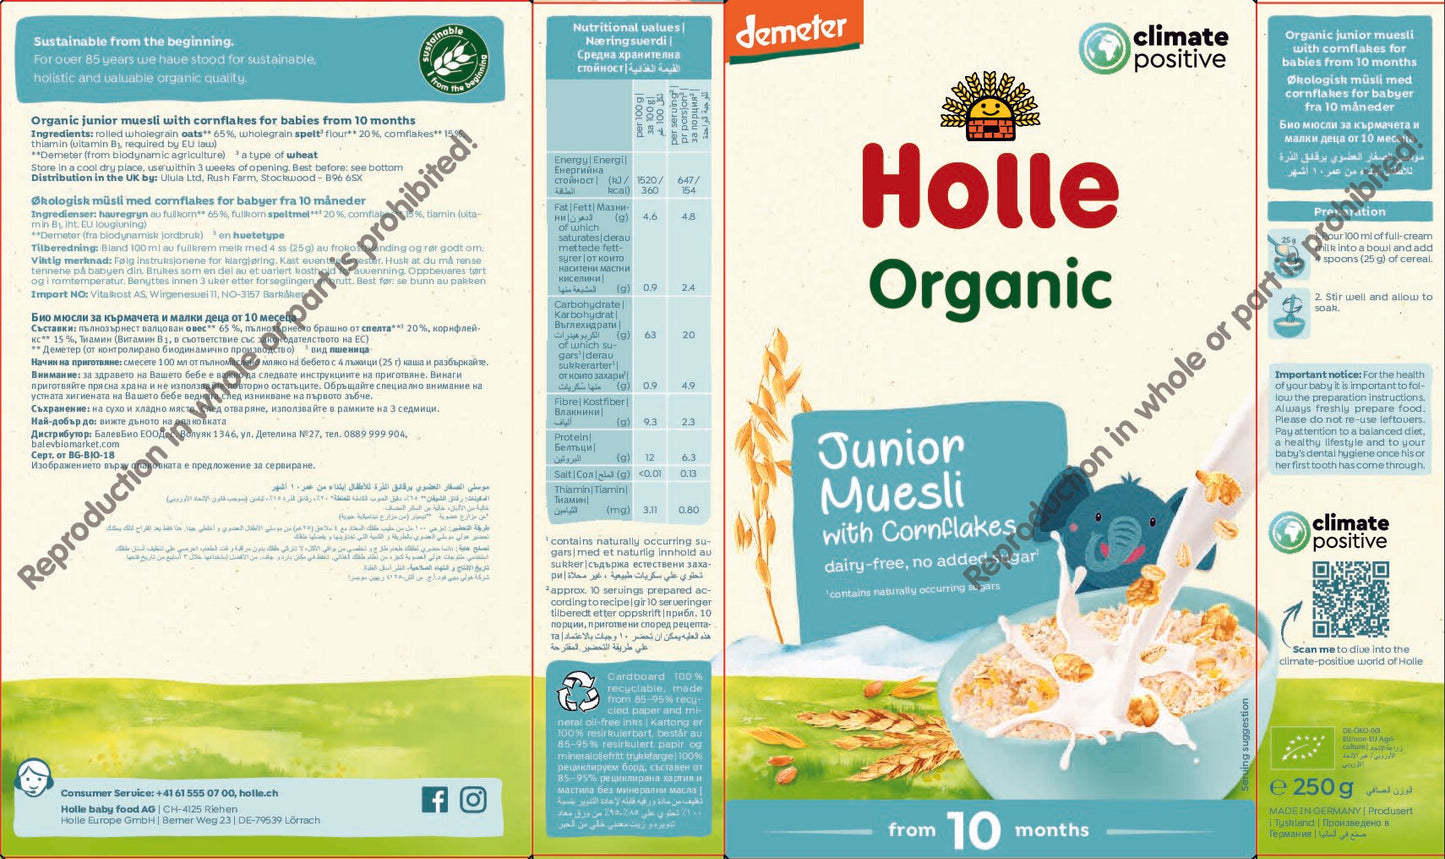 Holle Junior Multigrain Muesli with Cornflakes (10+ Months)